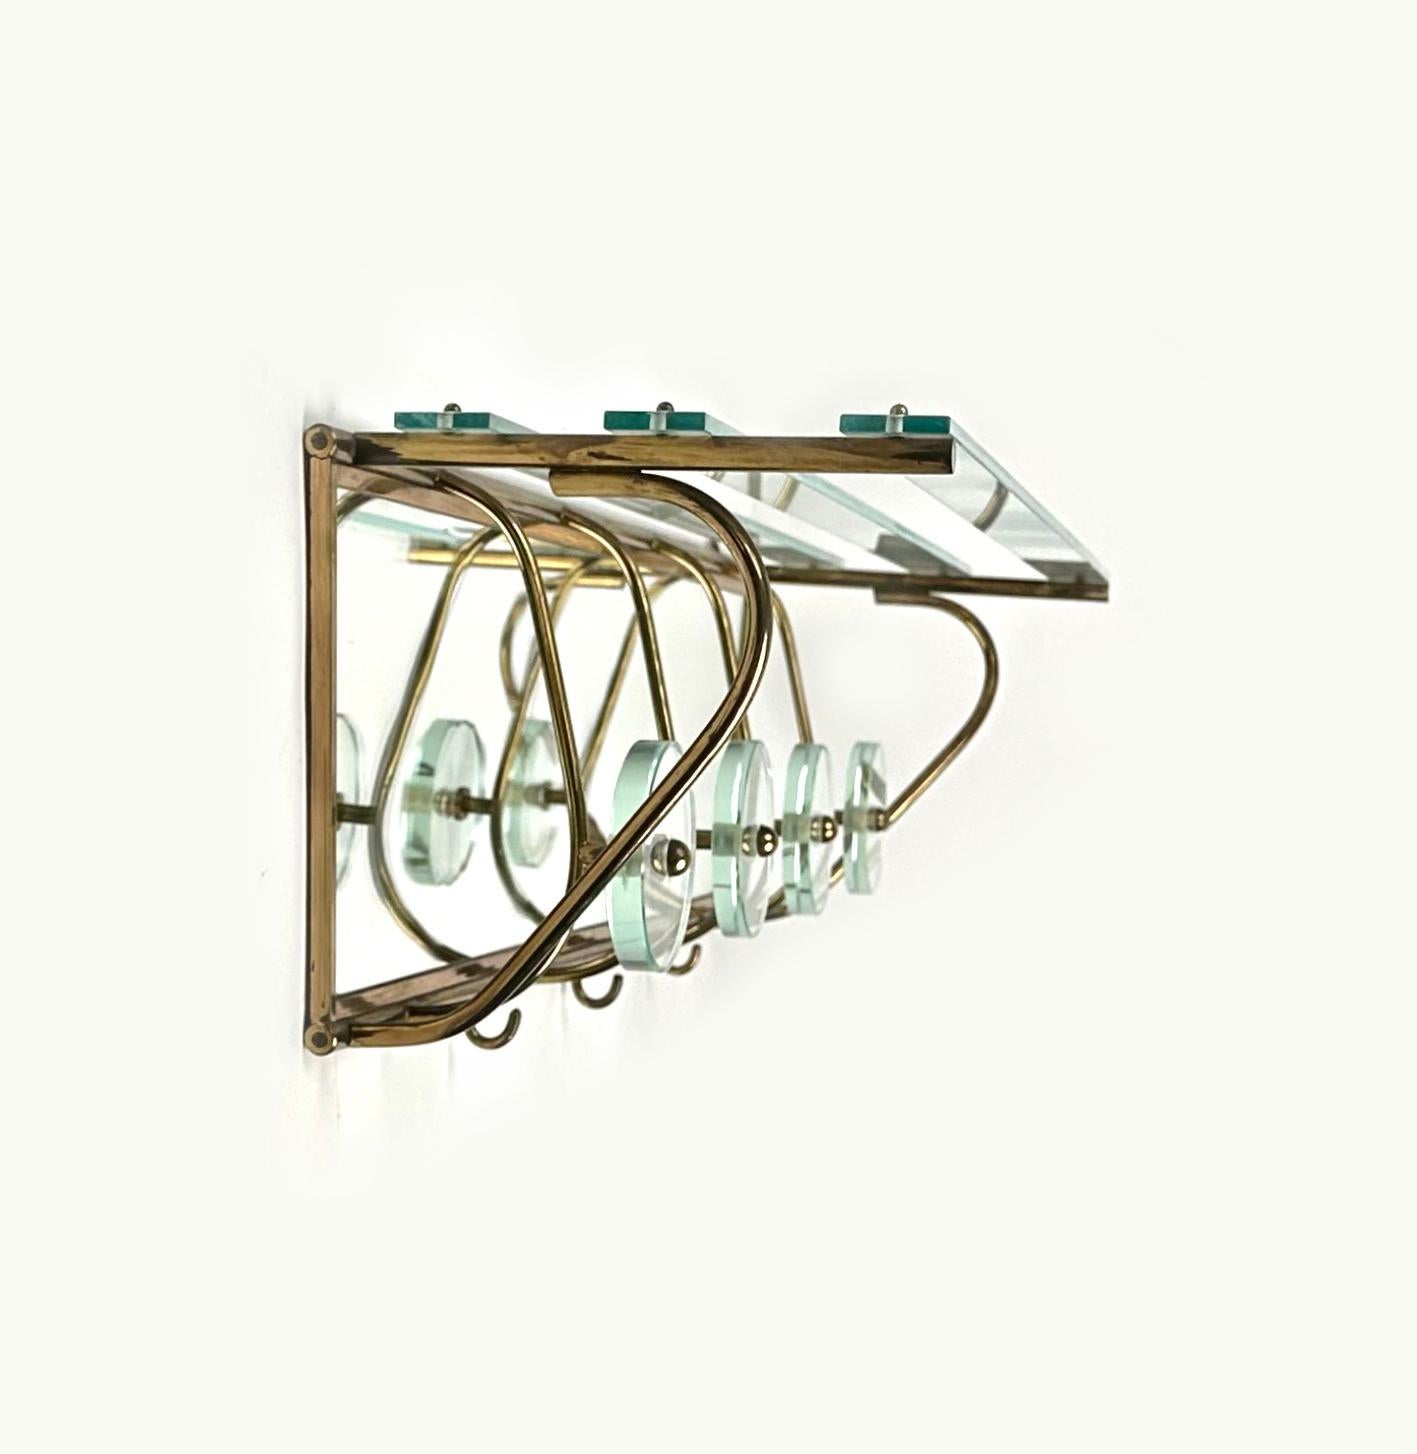 Italian Coat Rack Shelf in Mirror, Brass and Glass Fontana Arte style, Italy 1950s